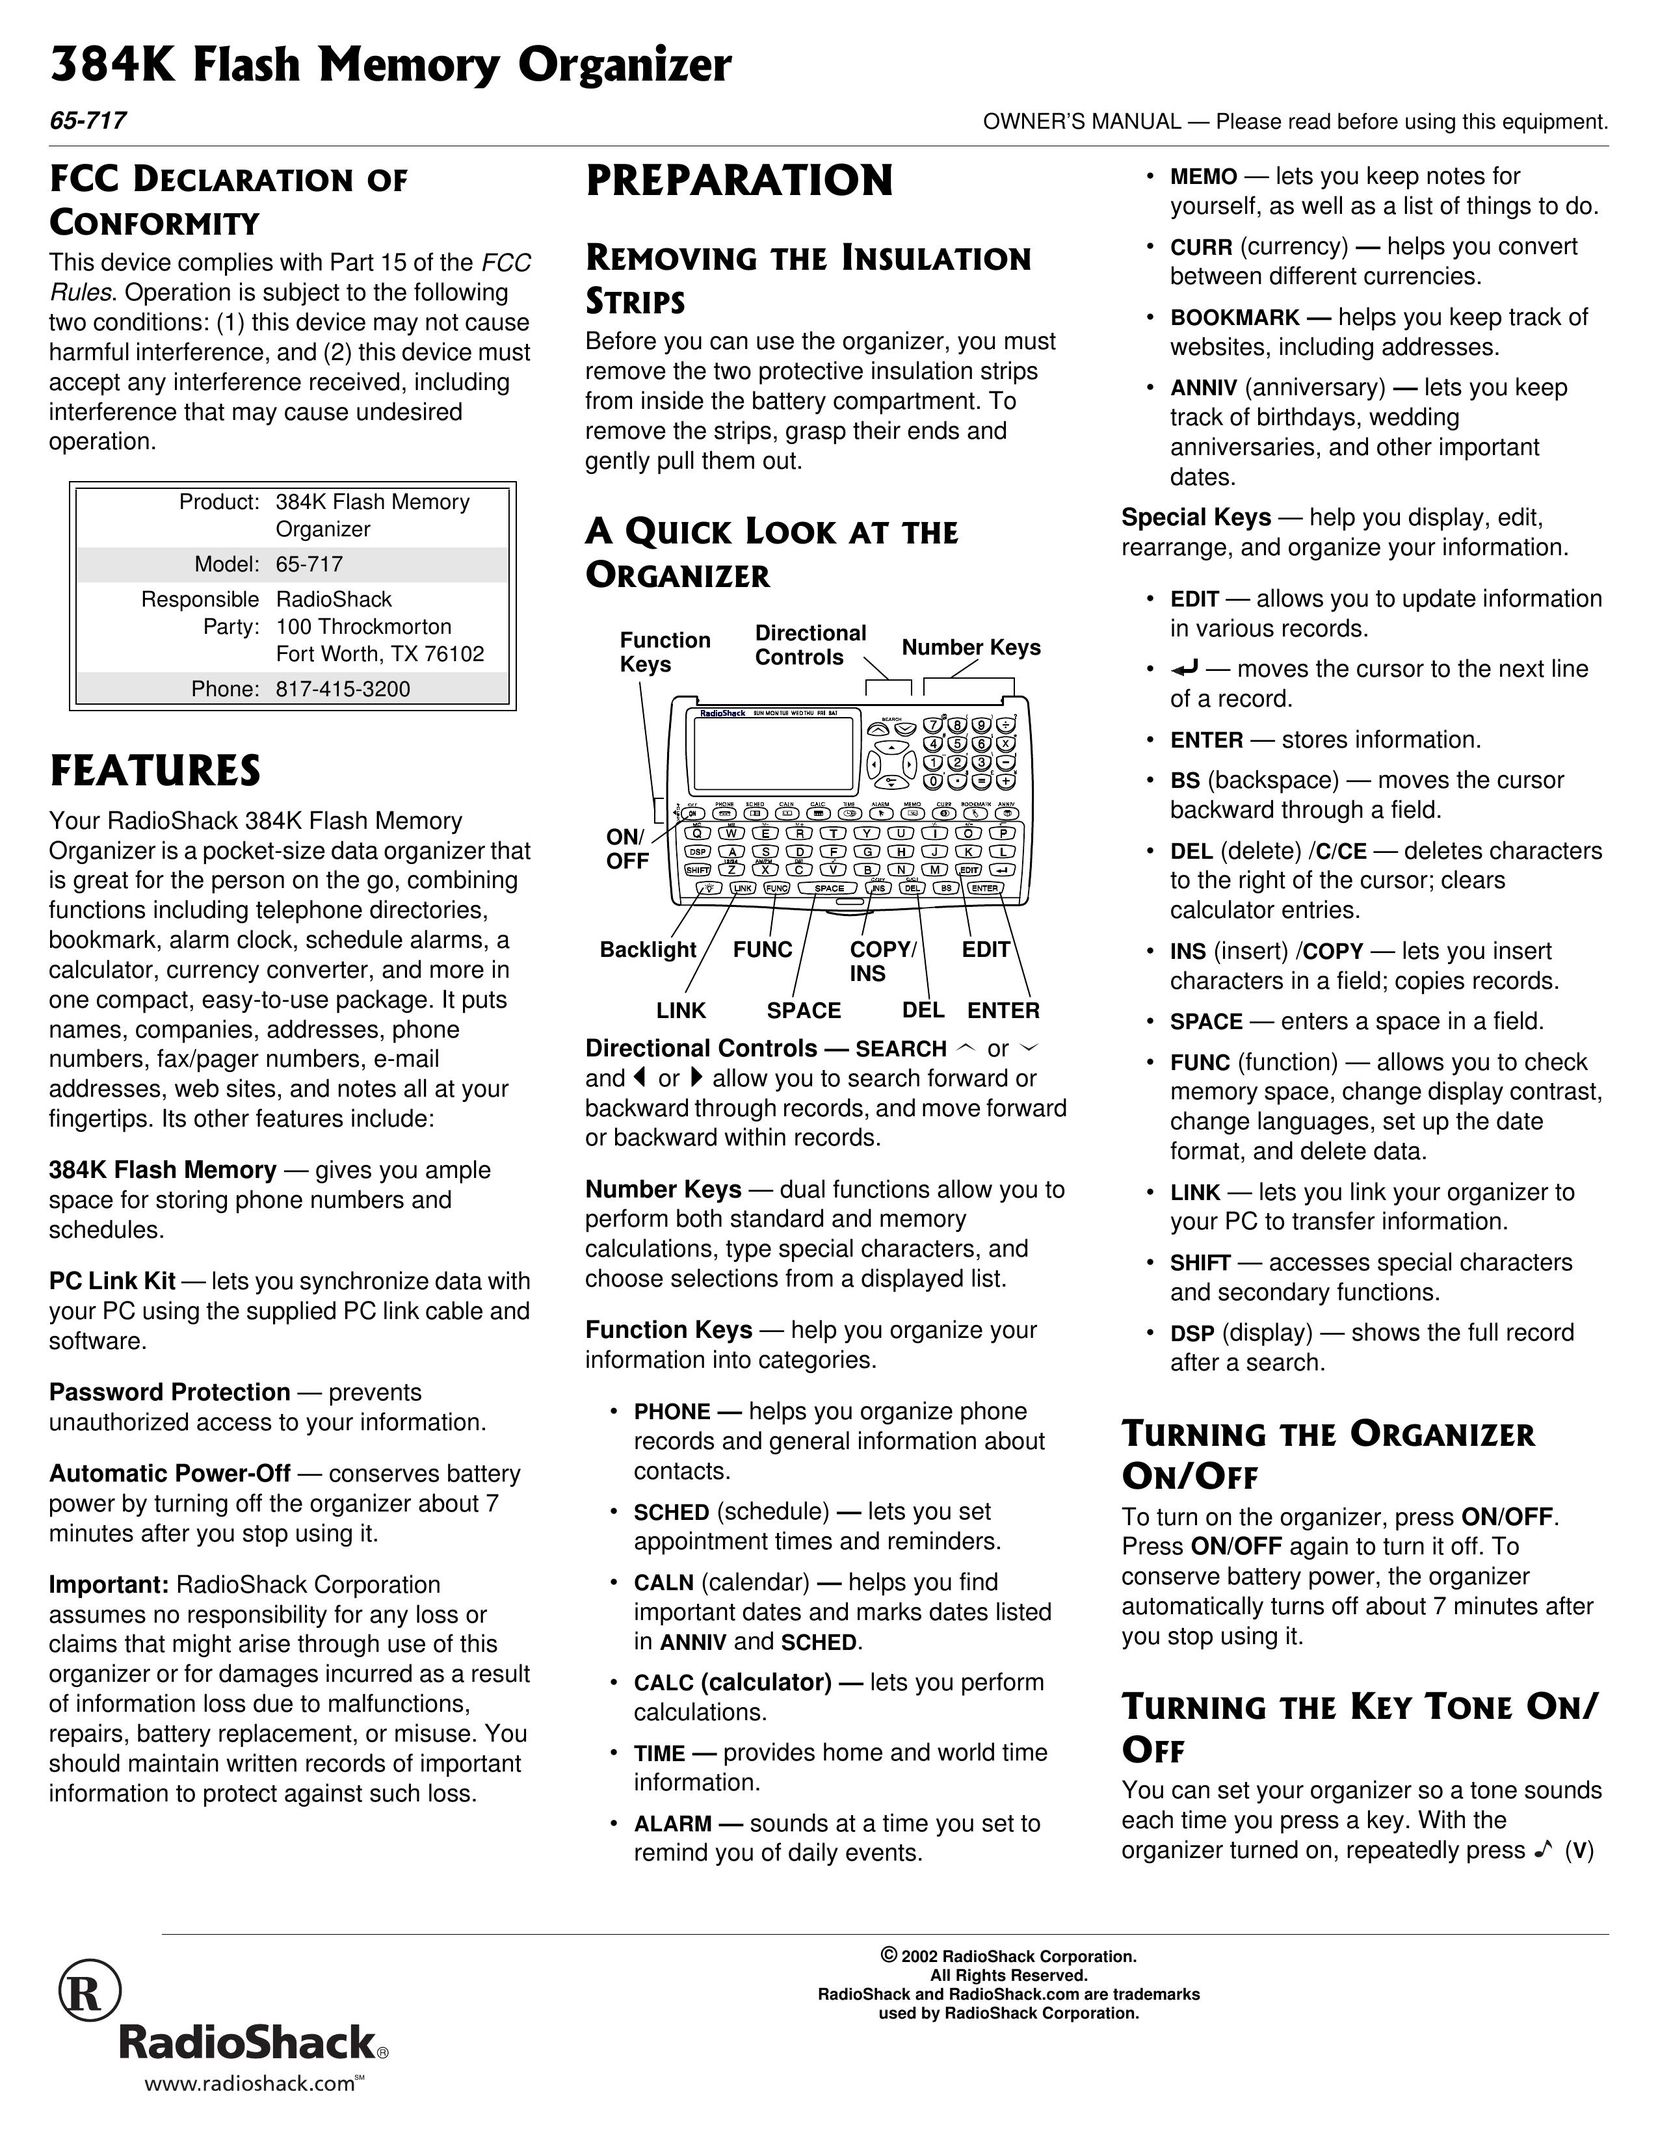 Radio Shack 65-717 Computer Drive User Manual